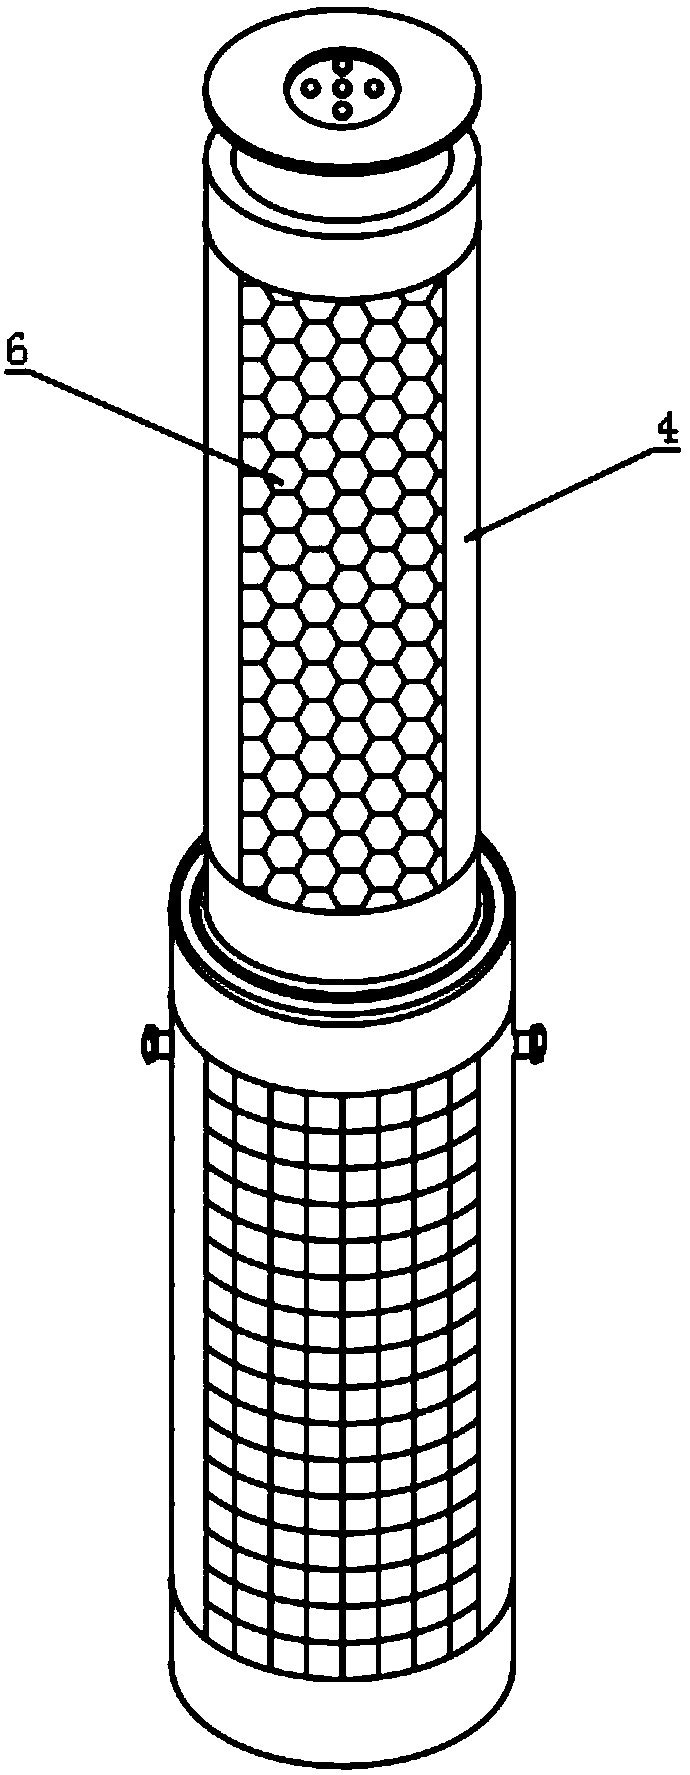 Column-type household ceramic heater